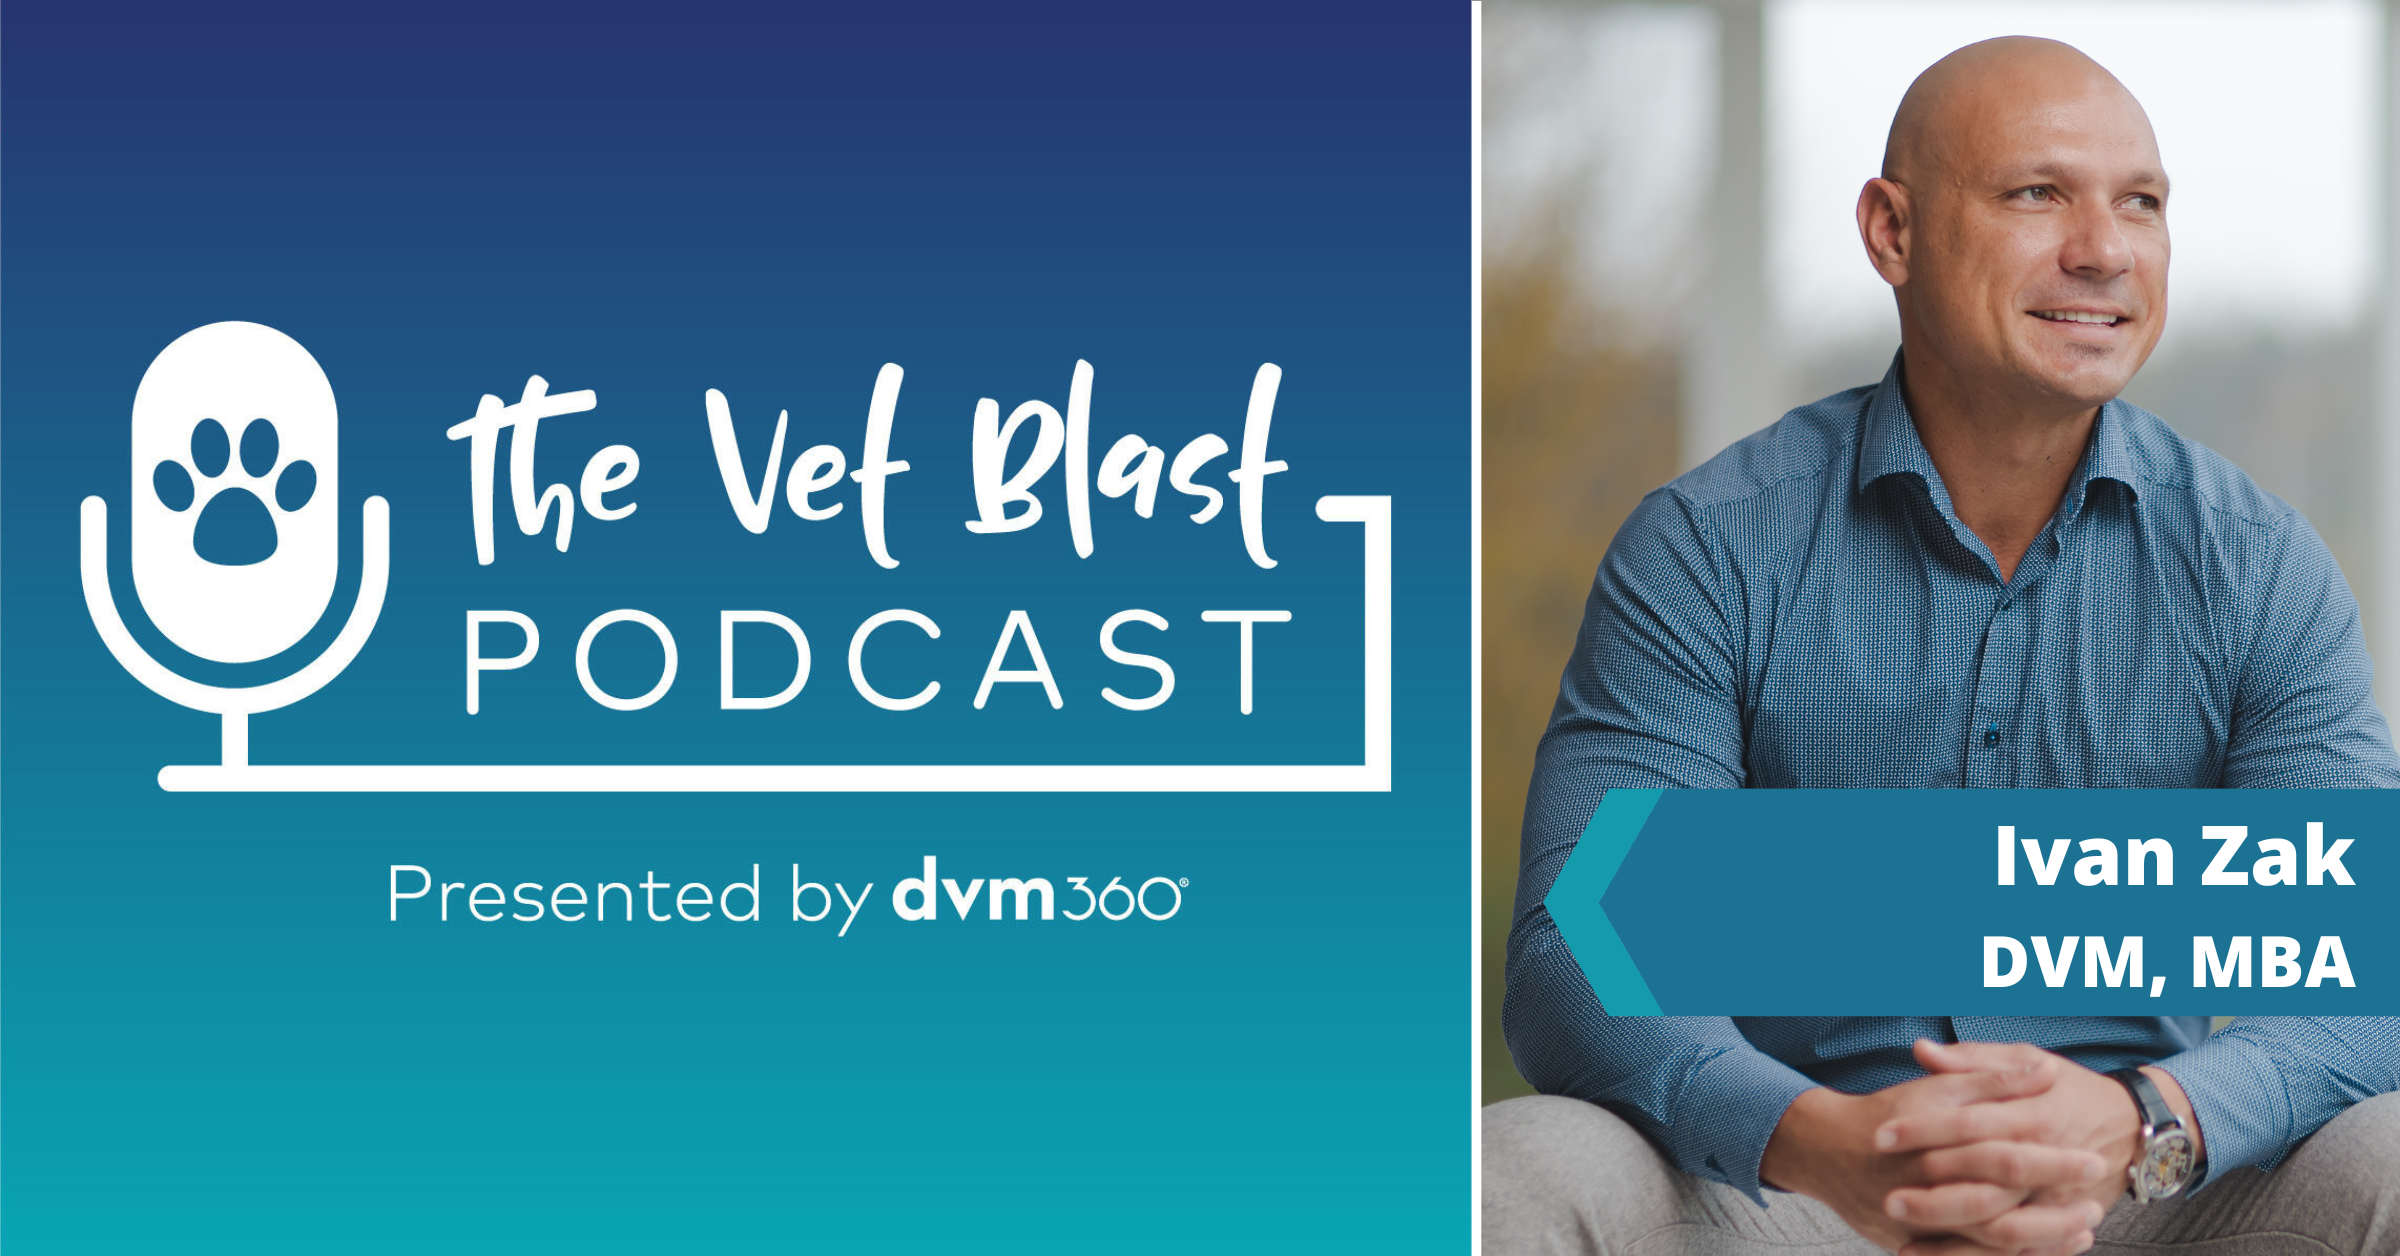 The Vet Blast Podcast with Ivan Zak